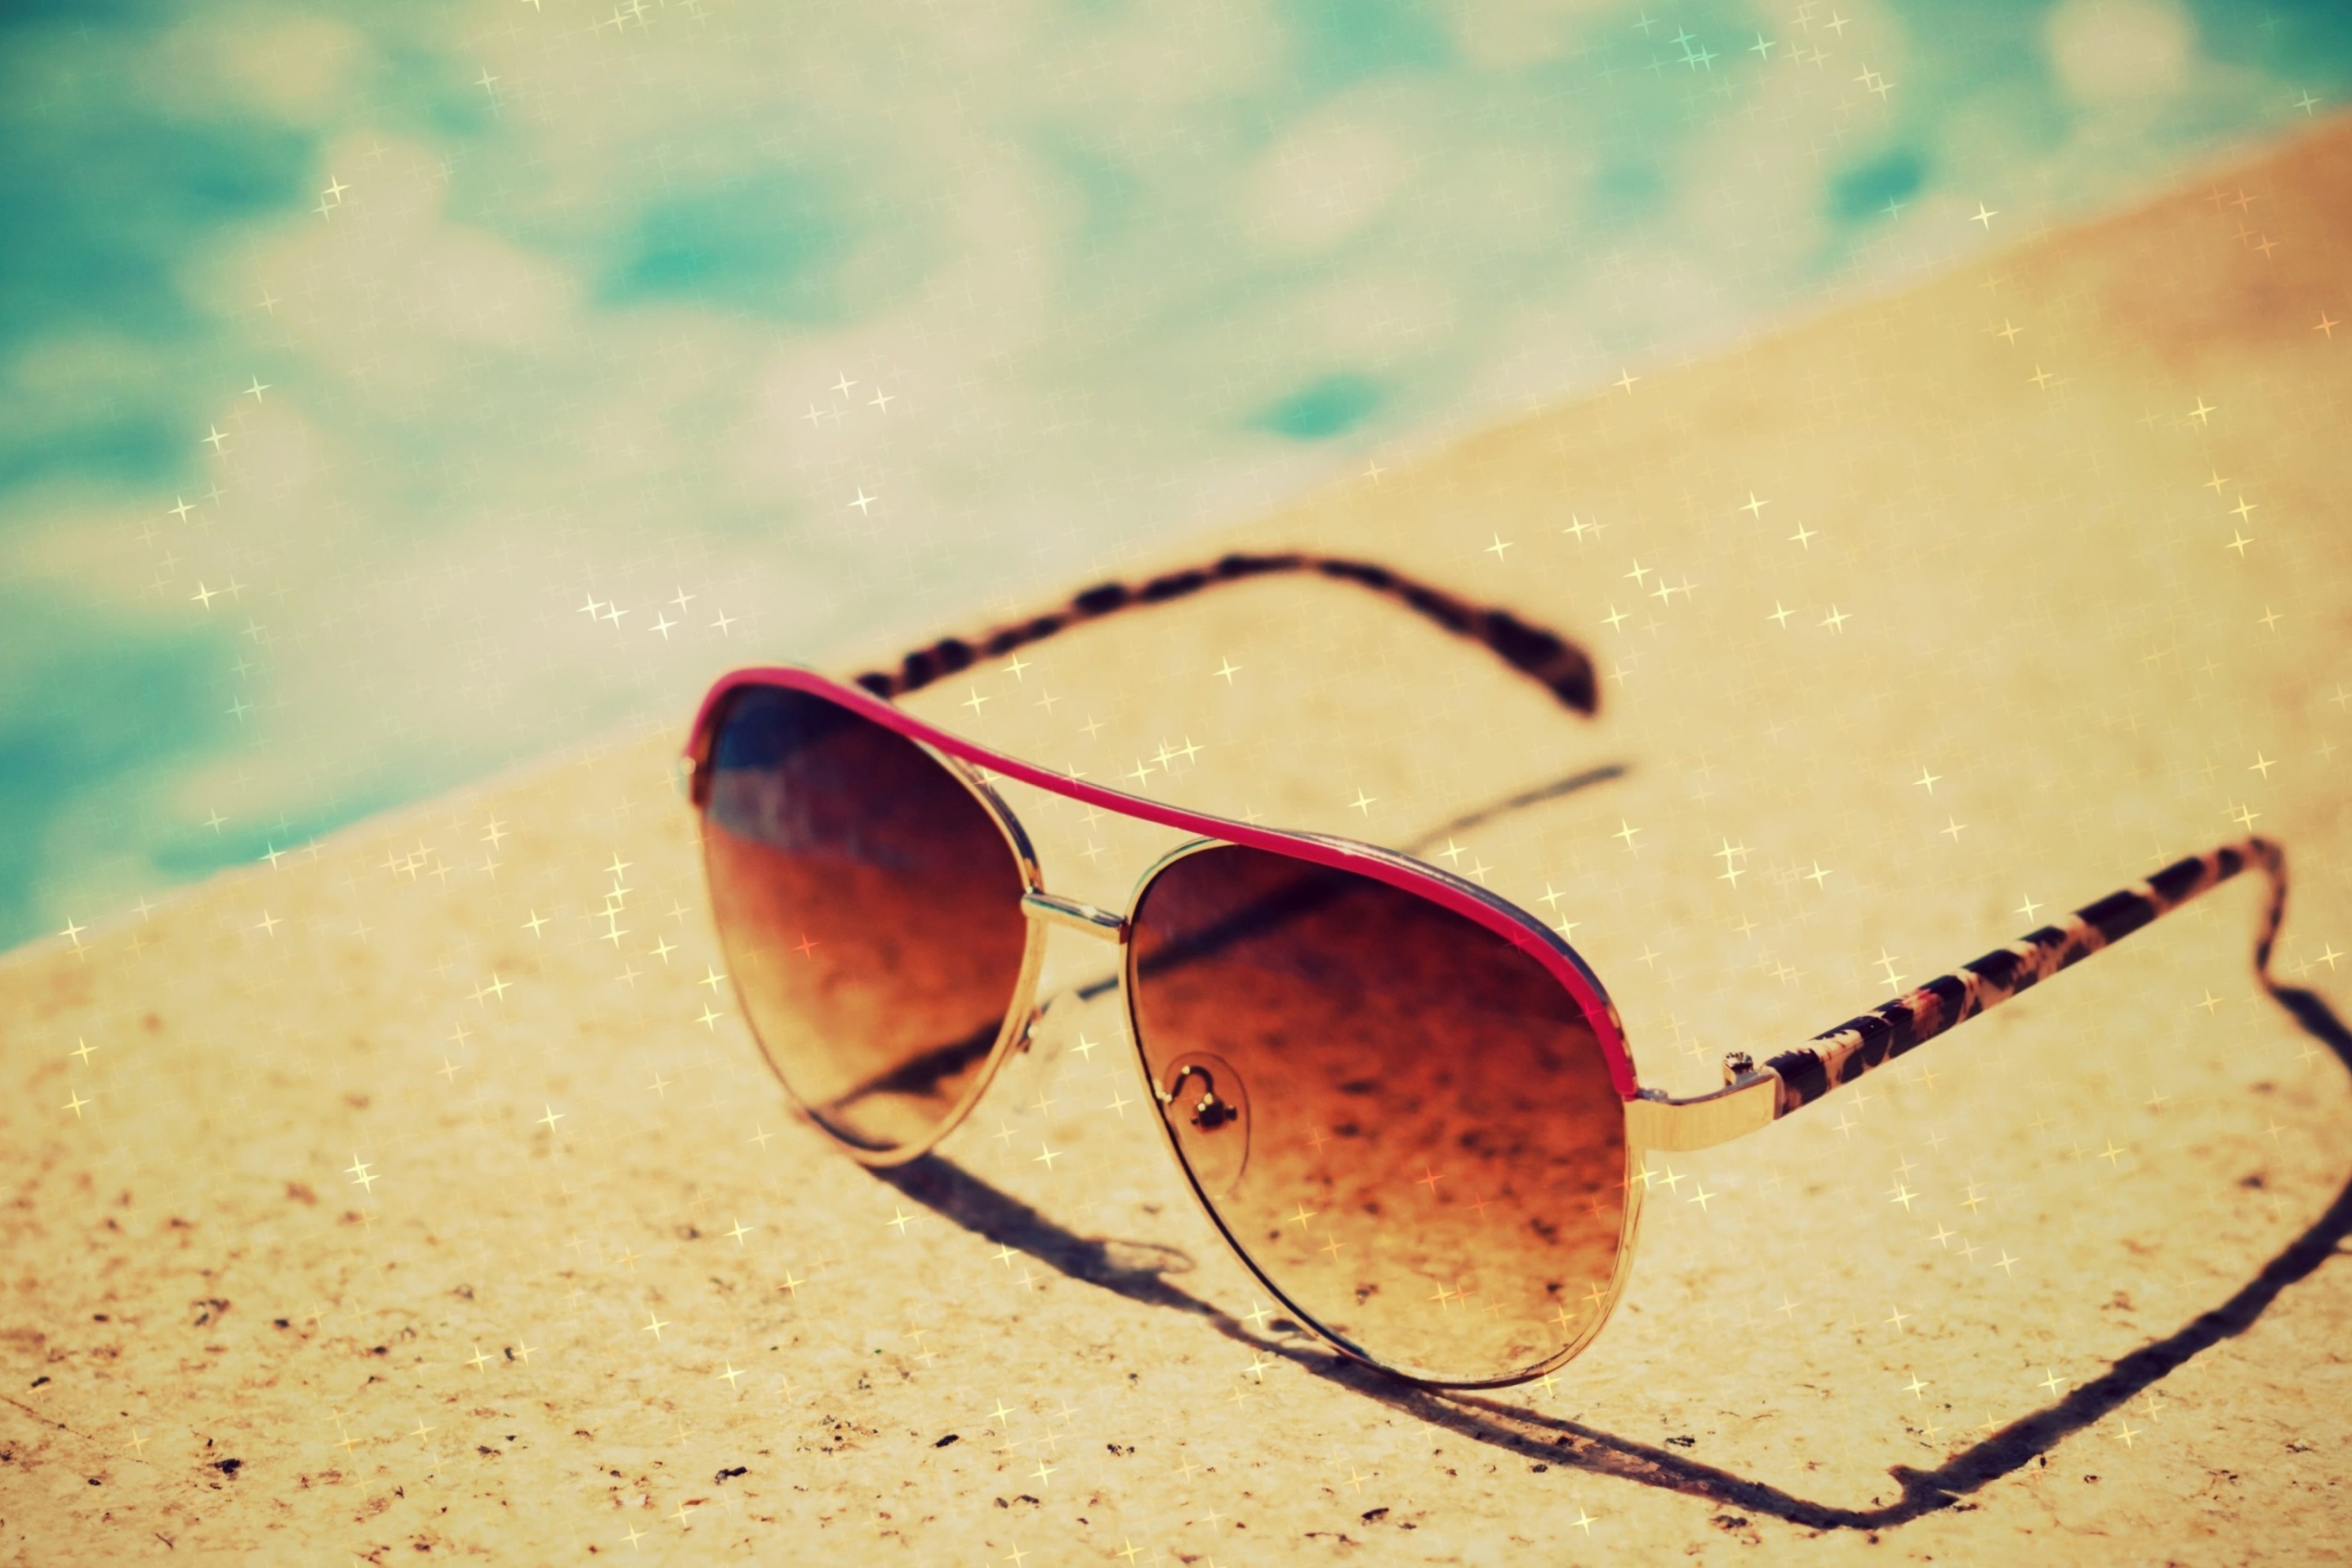 Sunglasses By Pool wallpaper 2880x1920